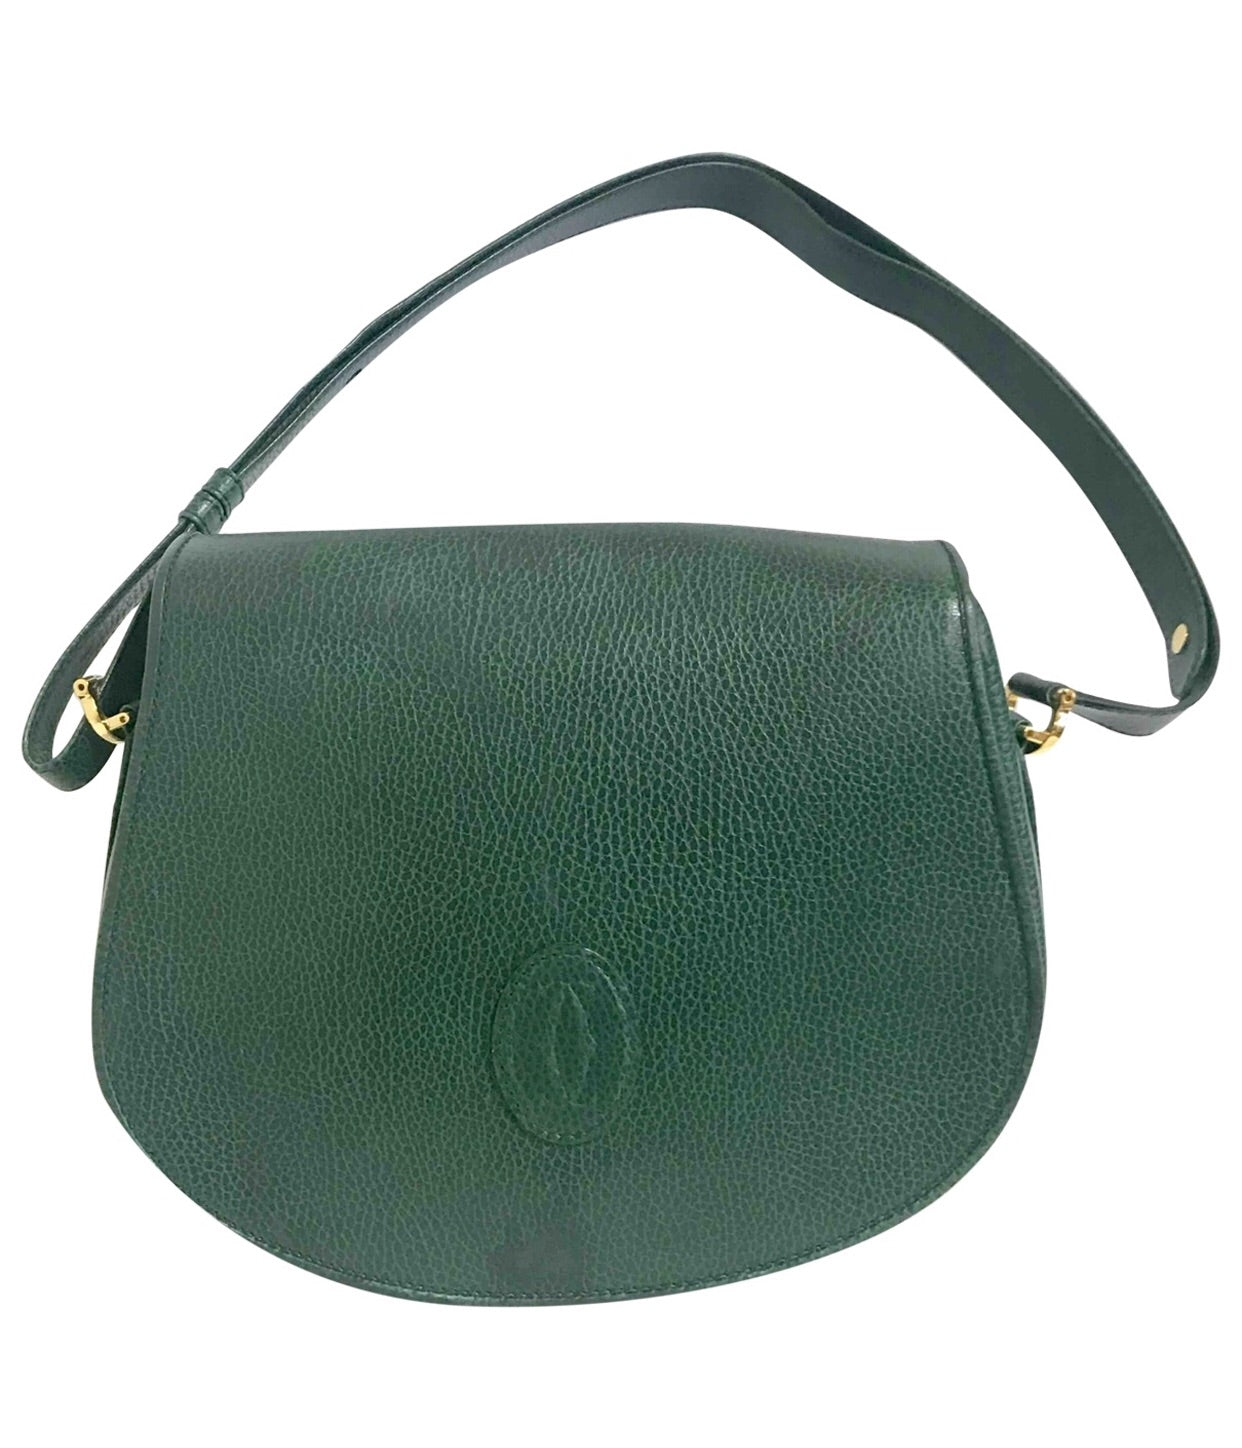 Green Grained Leather Soho Disco Bag